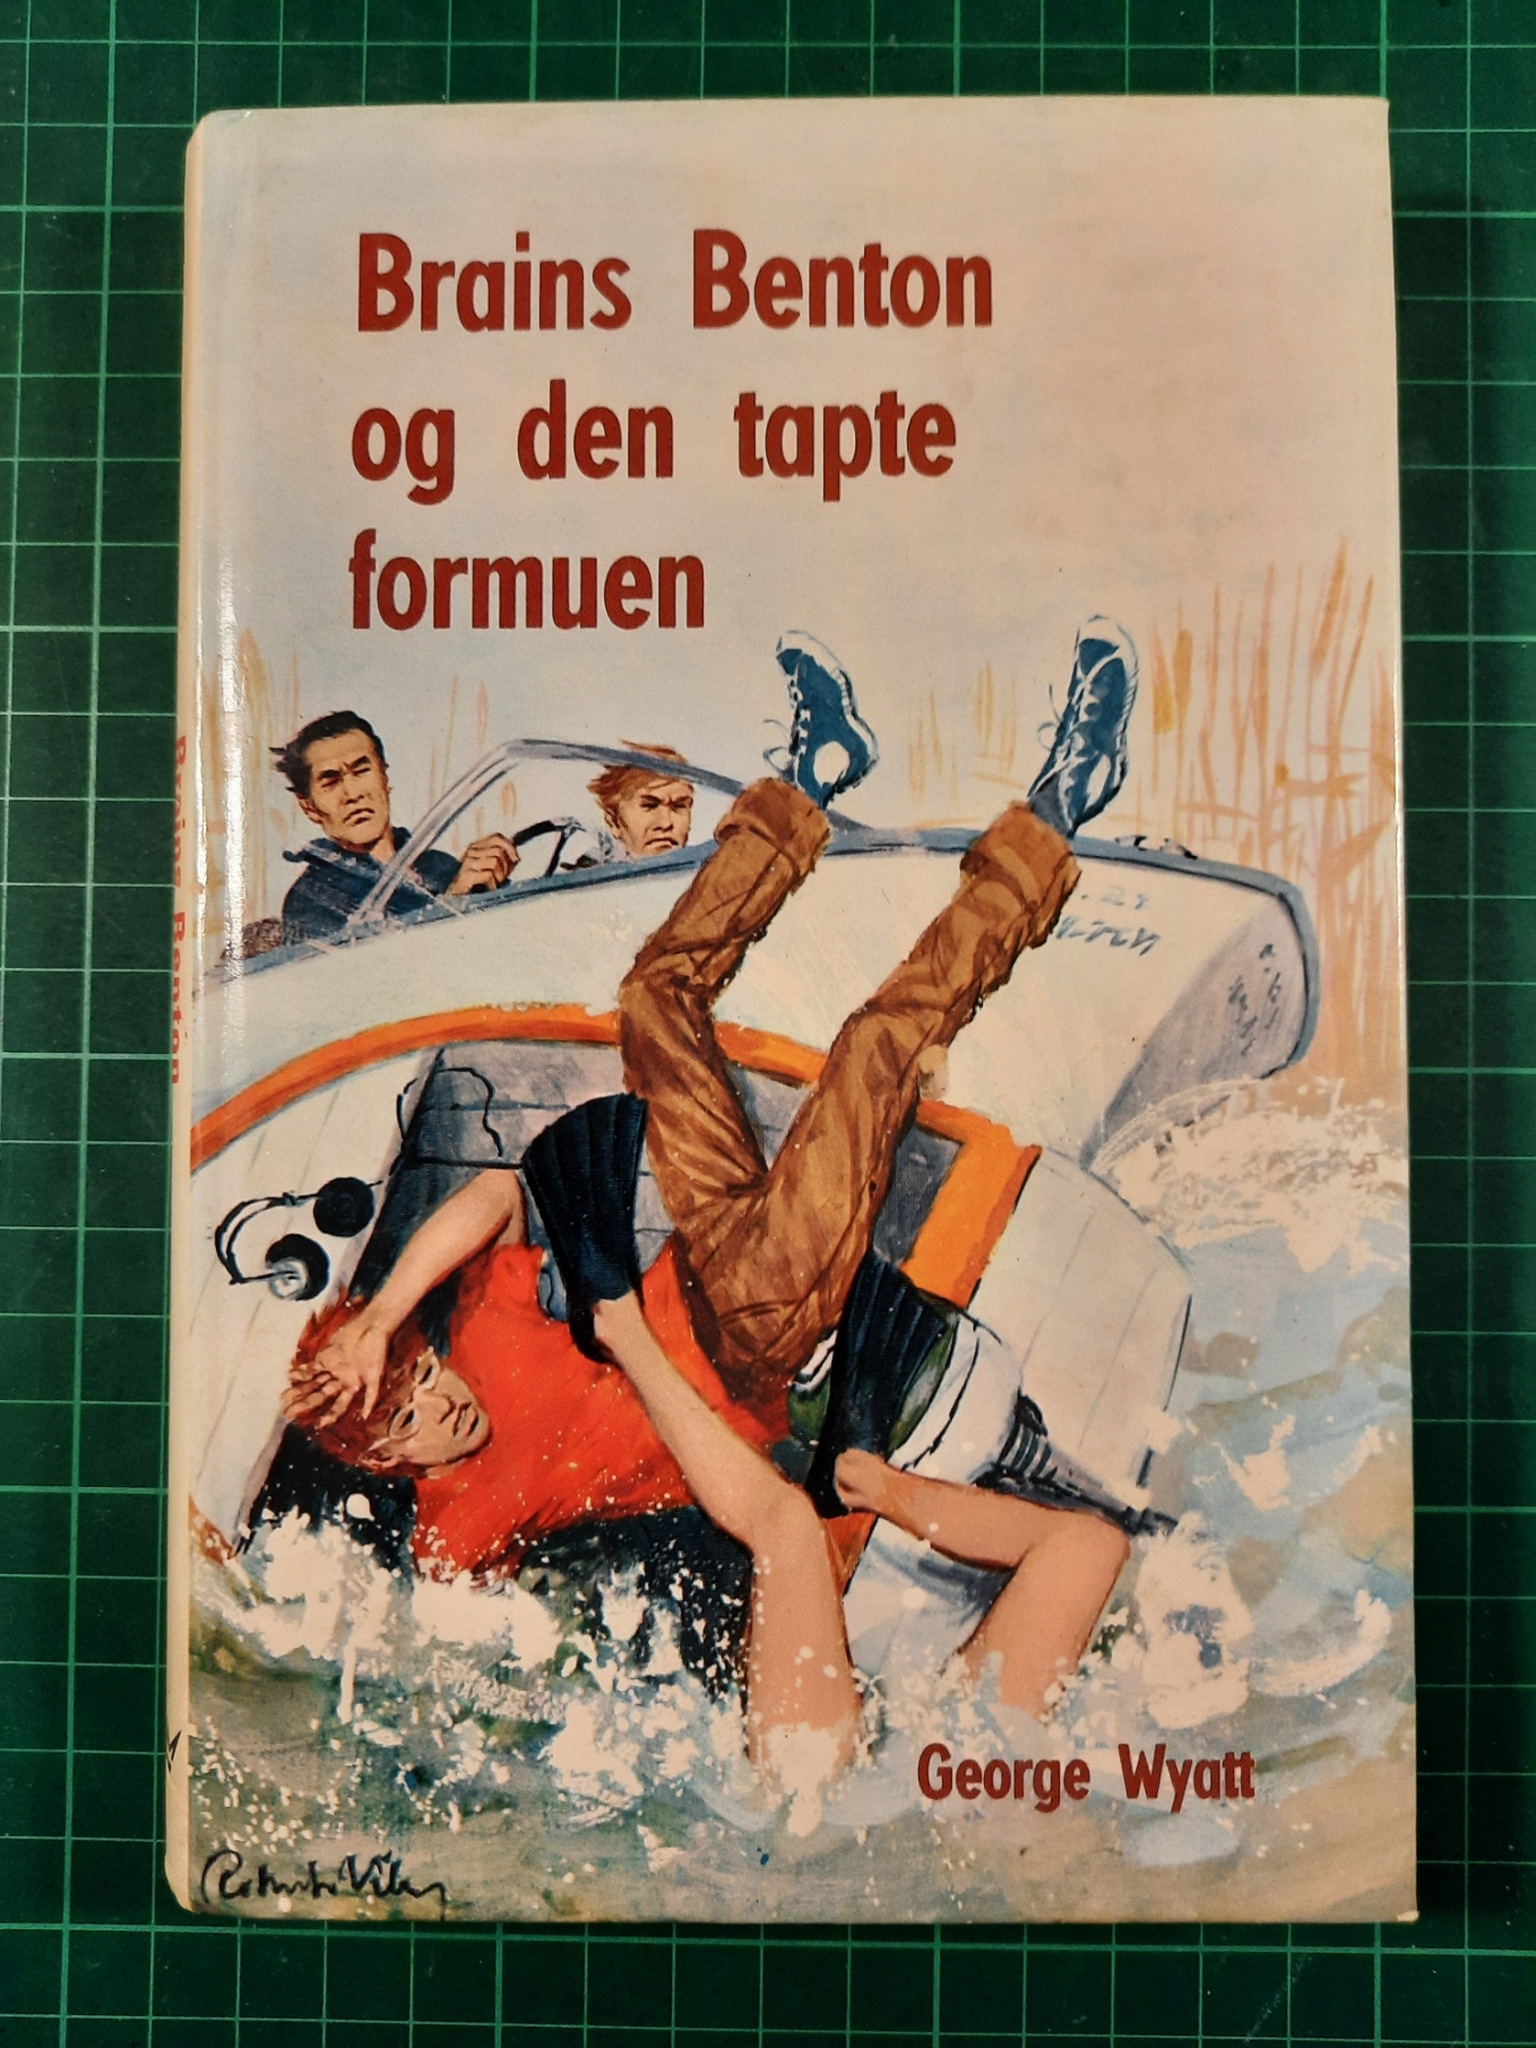 Brains Benton og den tapte formuen